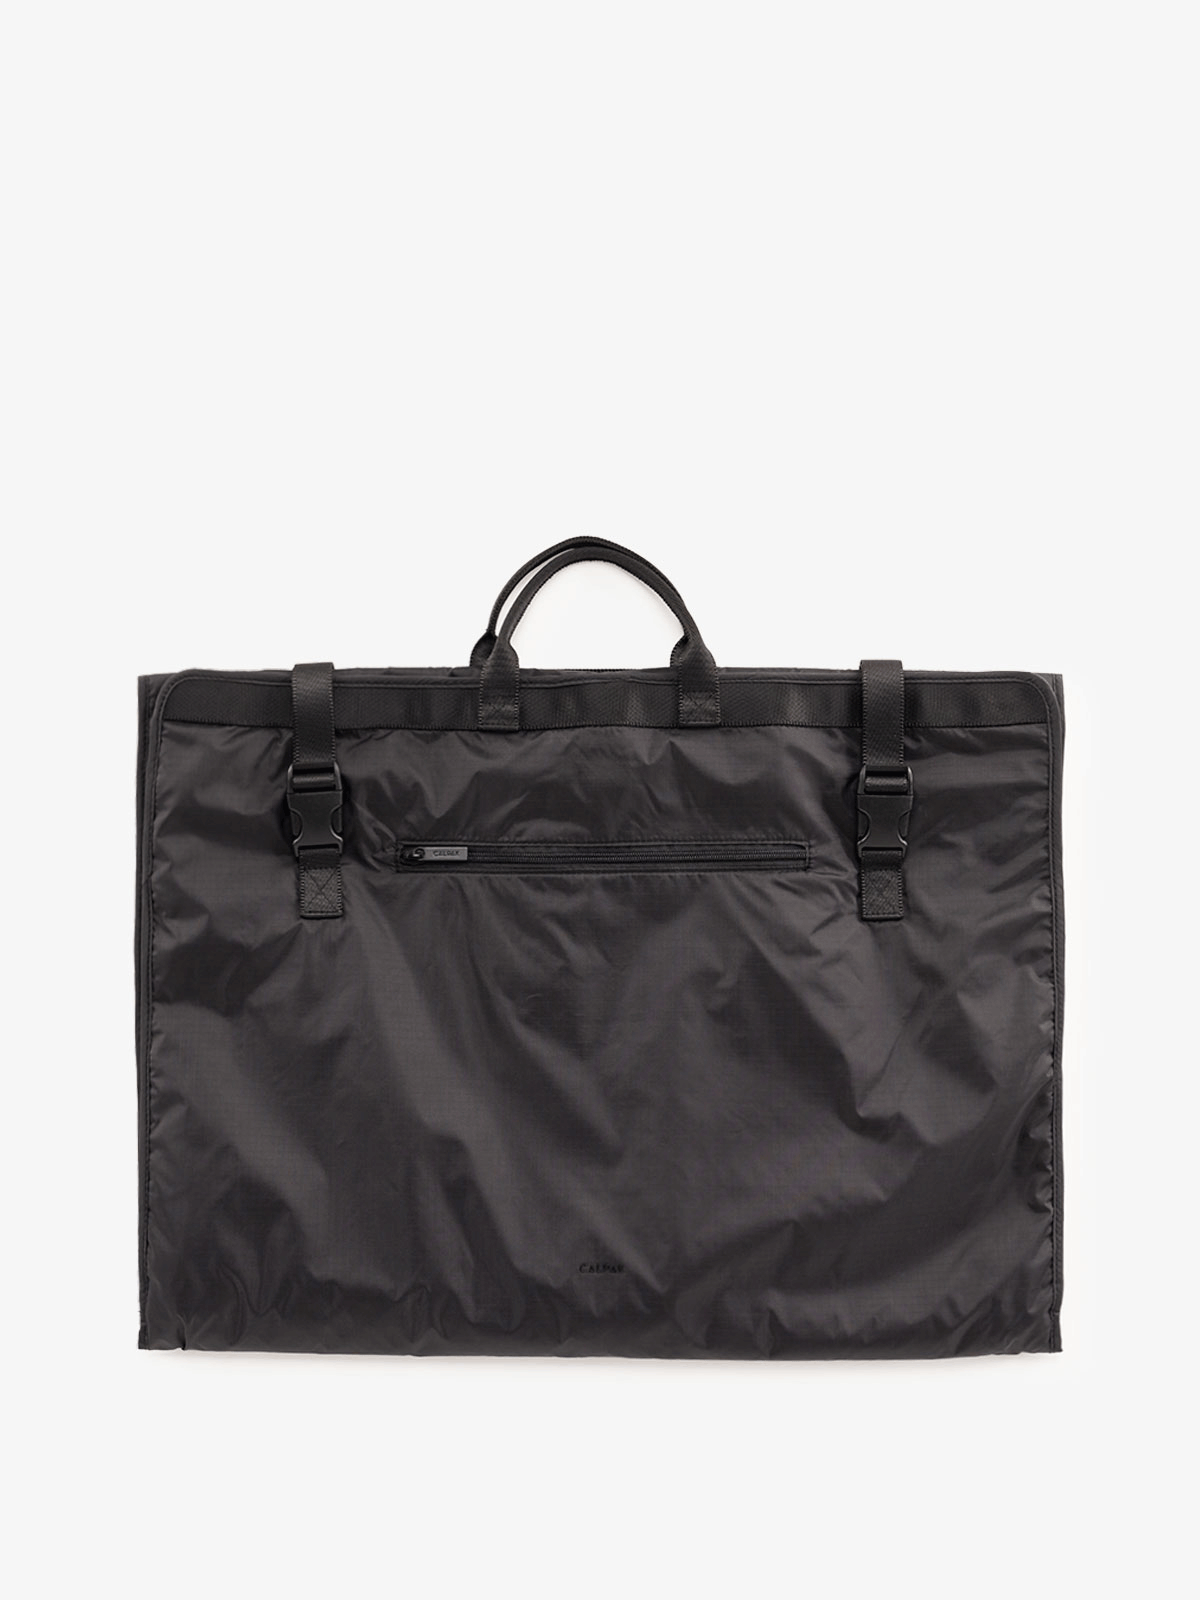 CALPAK large garment bag for storage in black